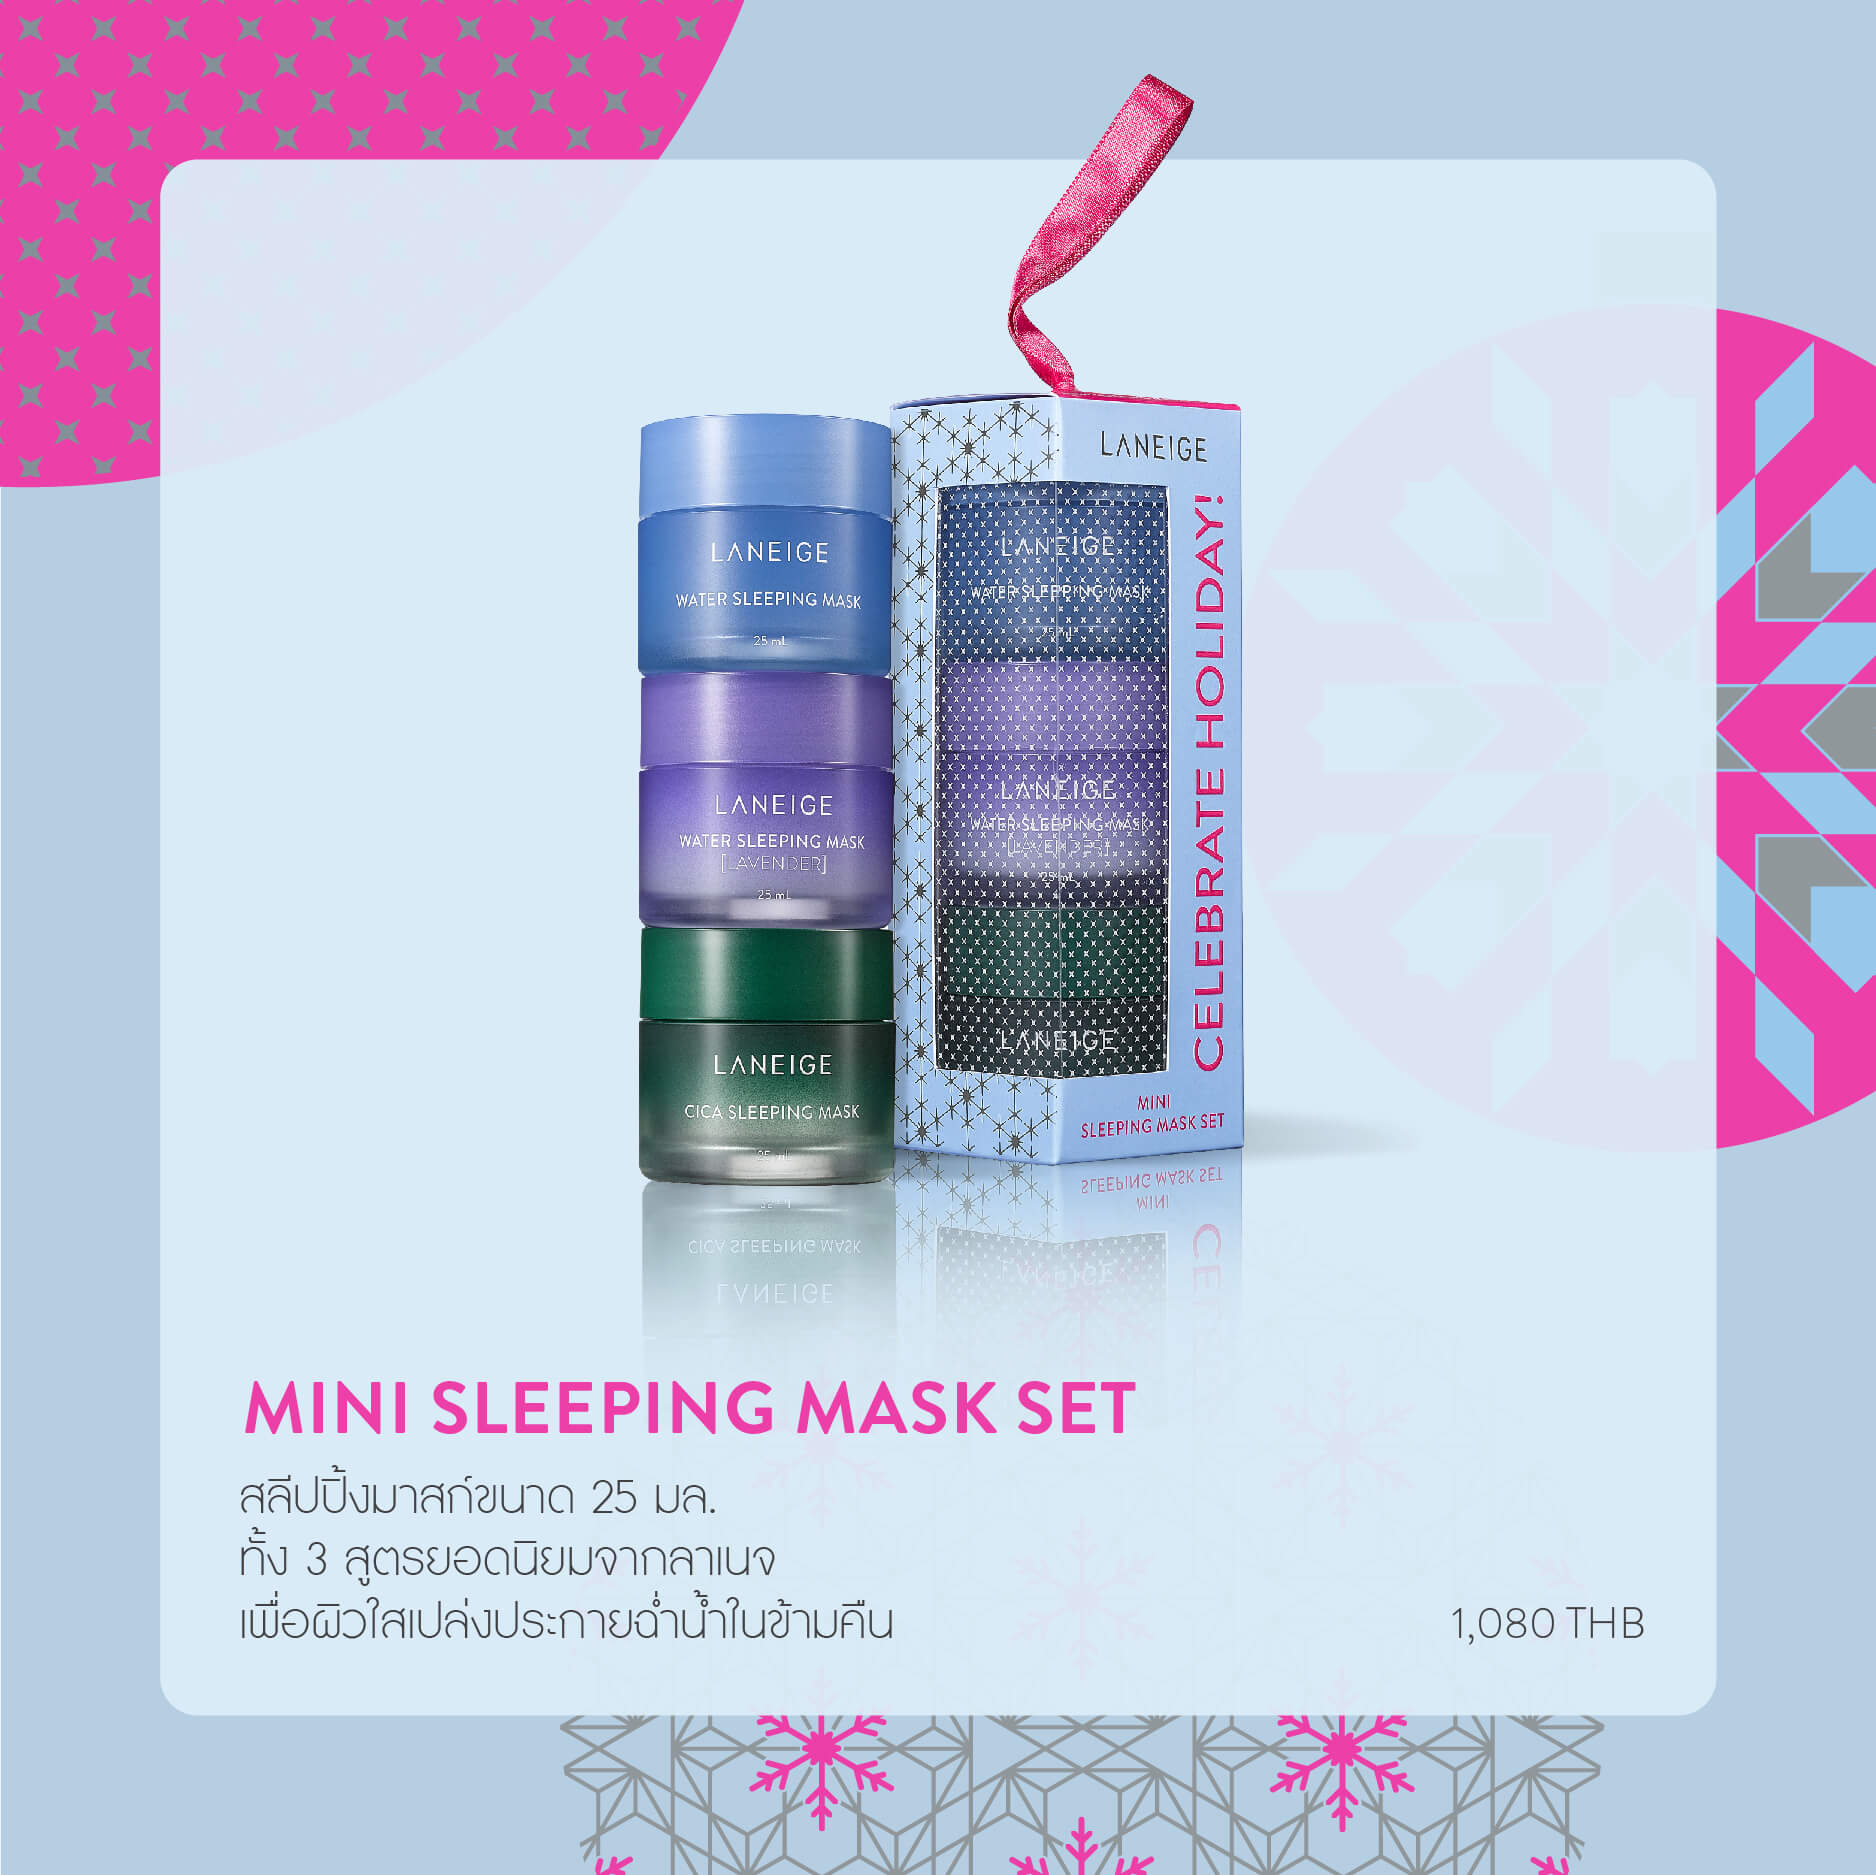 Laneige Sleeping Masks Mini Set   เซ็ตผลิตภัณฑ์ Sleeping Mask ขนาดพกพา มาในแพคเกจ Holiday Collection ที่จะทำให้ผิวของคุณได้พักผ่อนอย่างเต็มที่รวม 3 ไอเทมสุดฮิตขายดีตลอดกาลจากลาเนจ เหมาะสำหรับเป็นของขวัญมอบให้ตัวเองหรือคนพิเศษสำหรับคุณ  ภายในเซตประกอบด้วย  Laneige Water Sleeping Mask 25 ml  Laneige Sleeping Mask Lavender 25 ml  Laneige Cica Sleeping Mask 25 ml